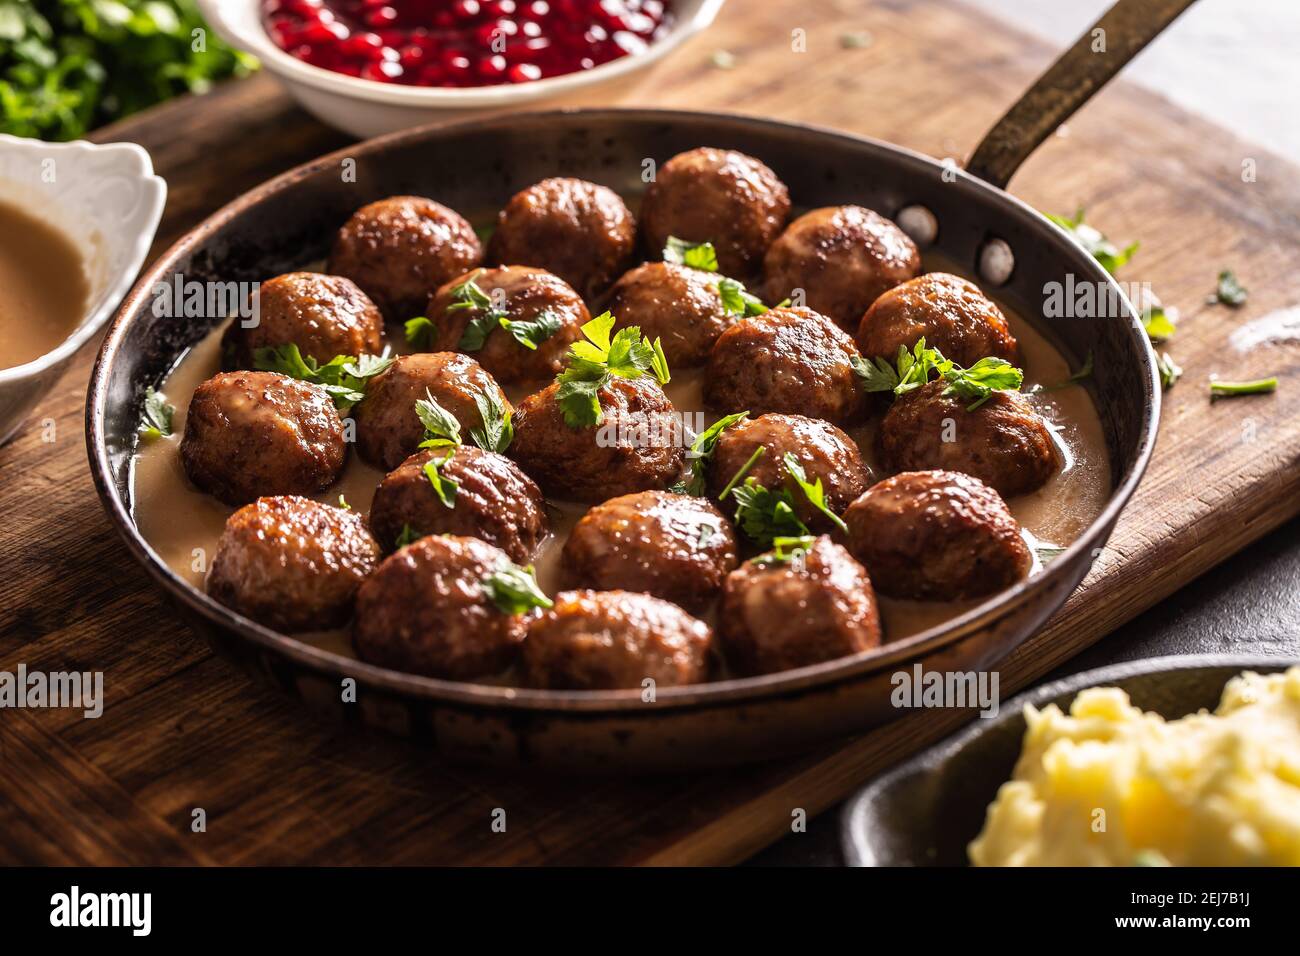 Pan with freshly-made kottbullar meatballs in a sauce. Stock Photo